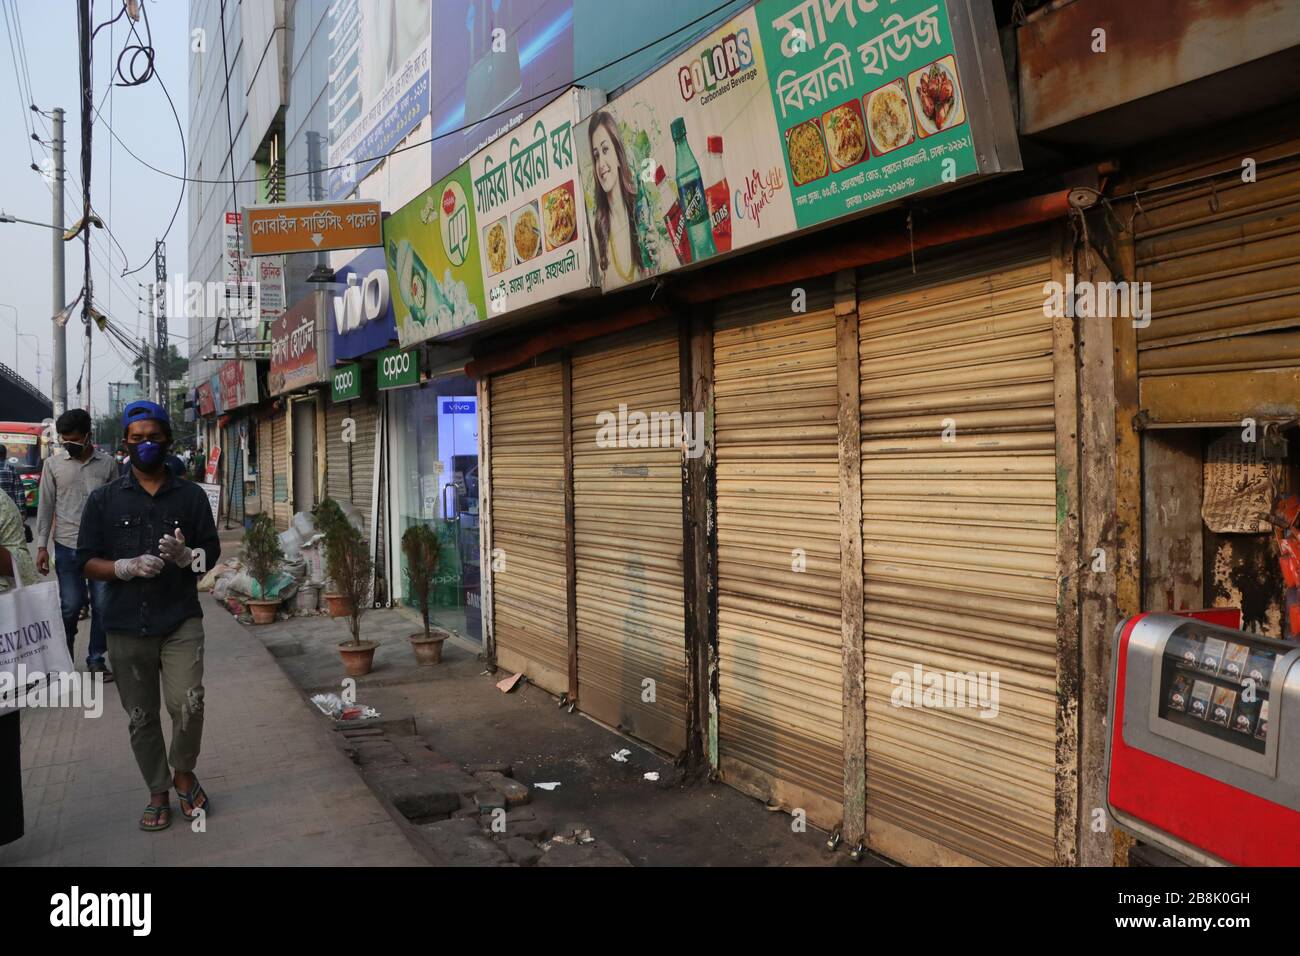 The coronavirus panicked and turned the capital into a temporary food shop..@ nazmul Islam/alamy stock photo Stock Photo